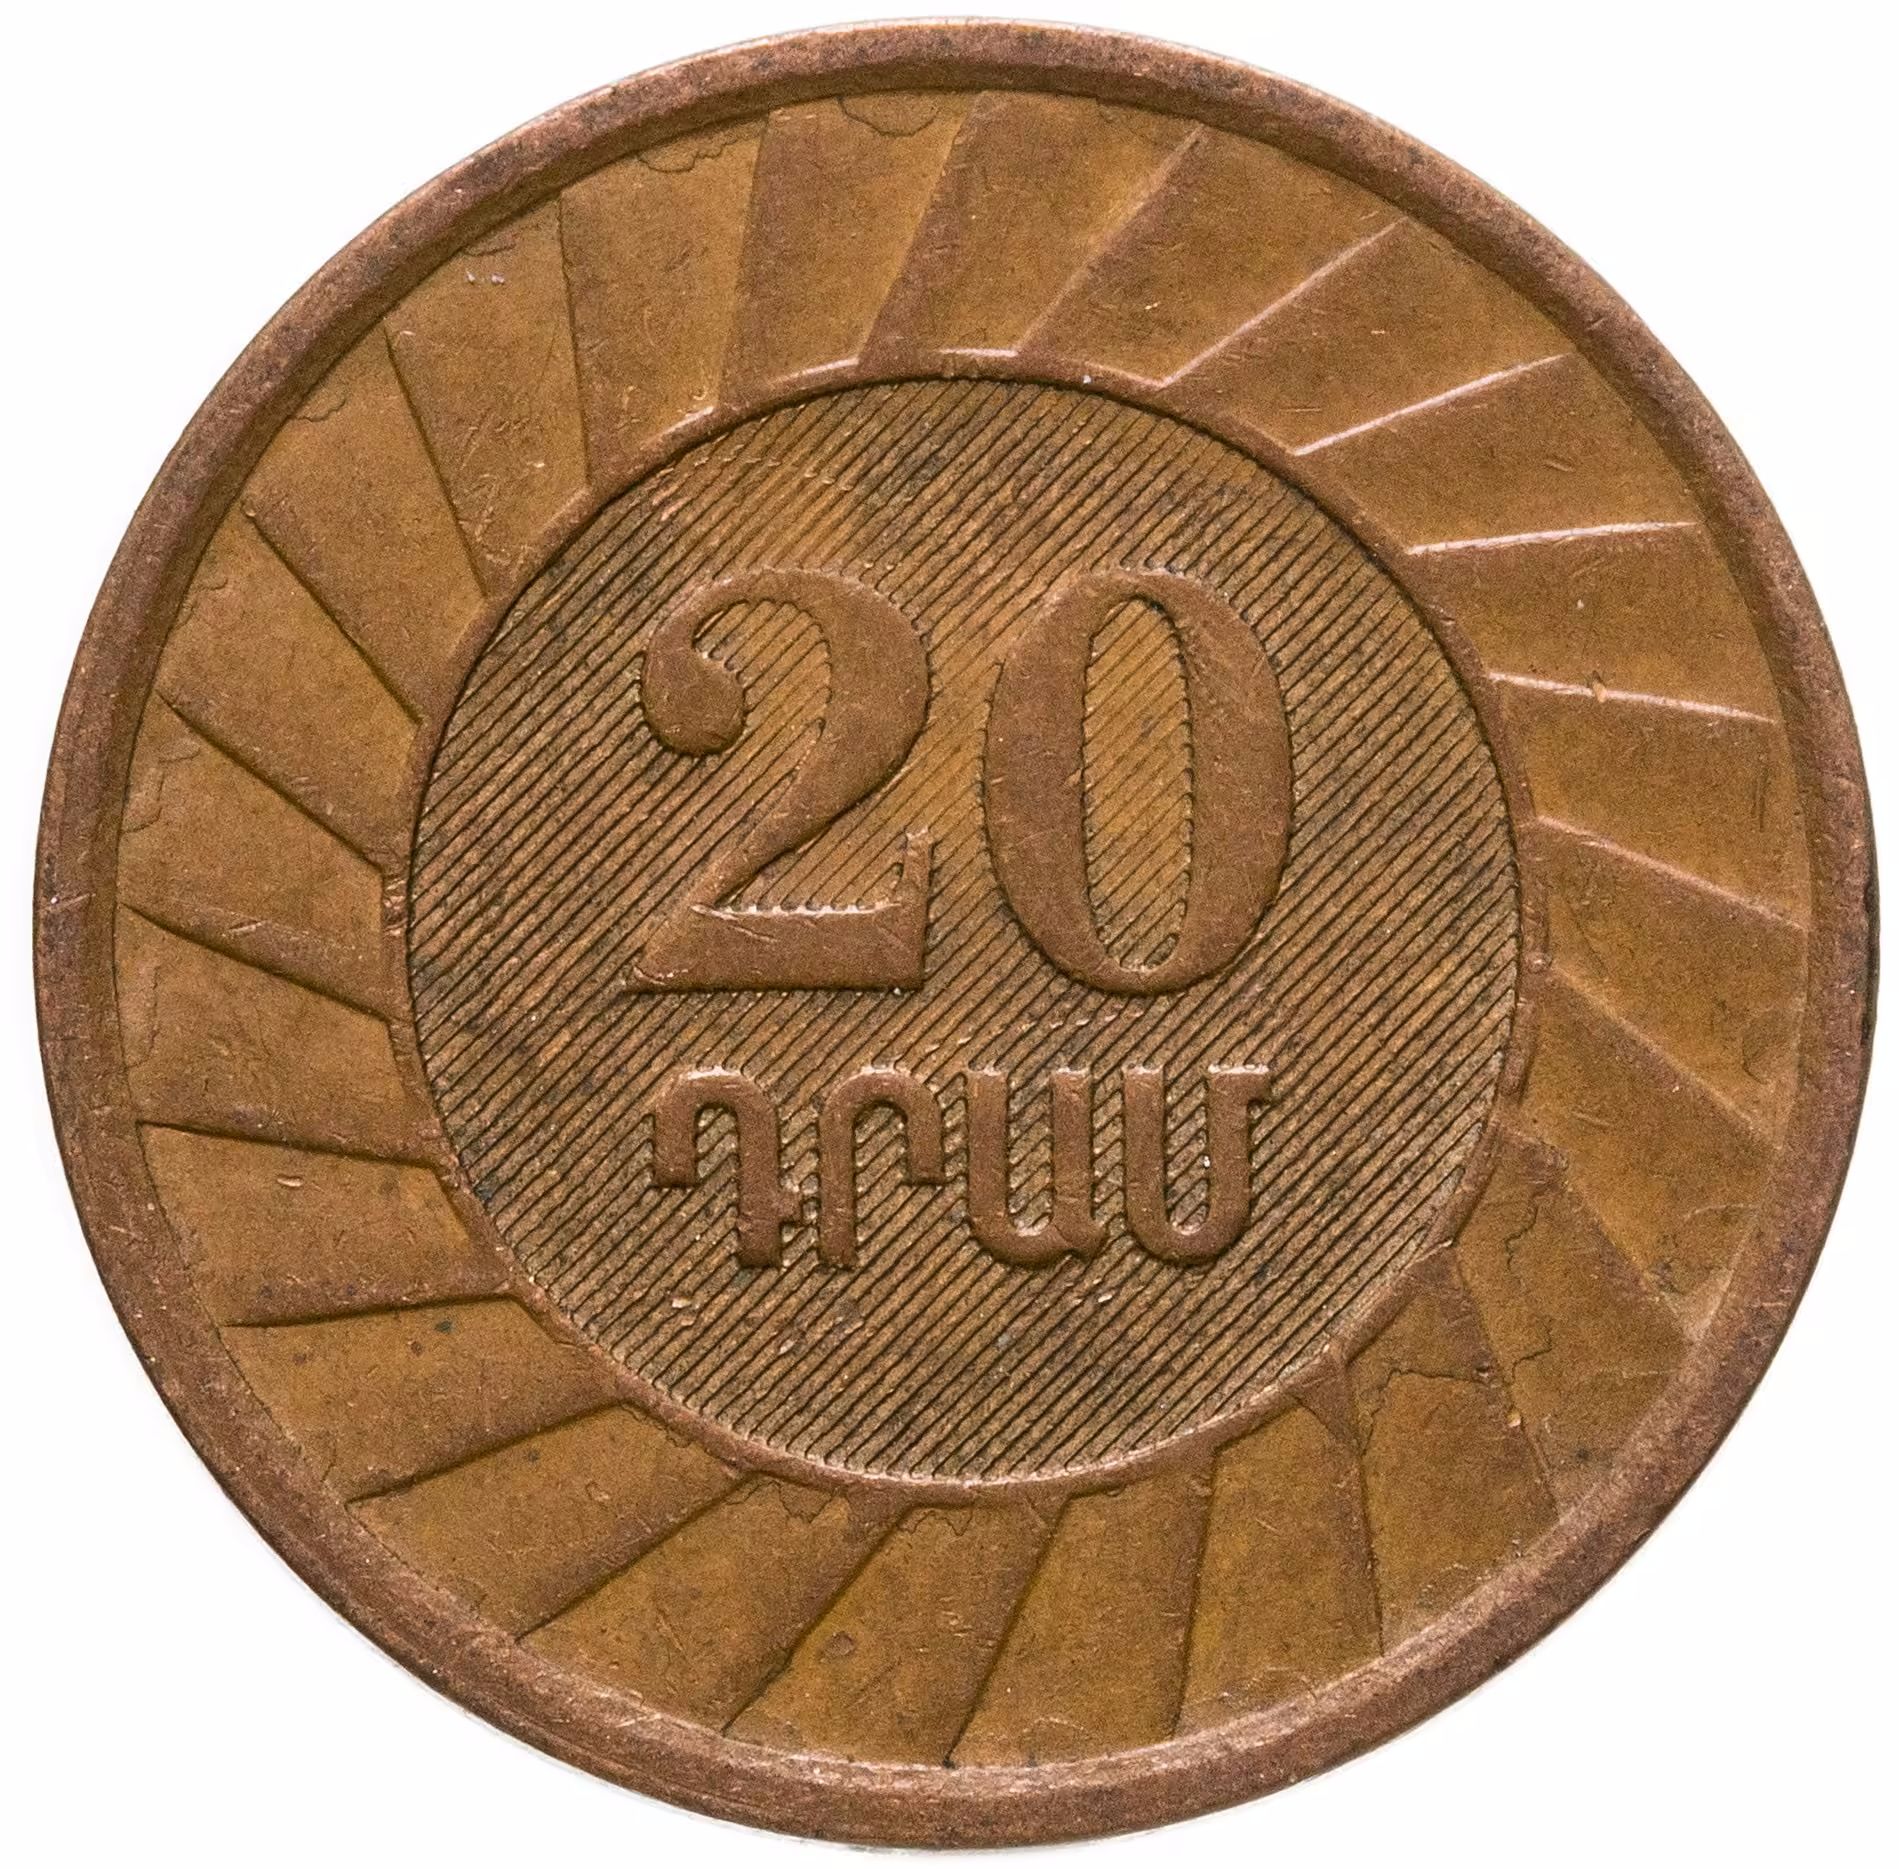 70000 драм в рублях. 20 Драмов 2003 Армения. Армения драм монеты 20. Монета Армения 20 драм 2003. Армянская монета 20 драм.